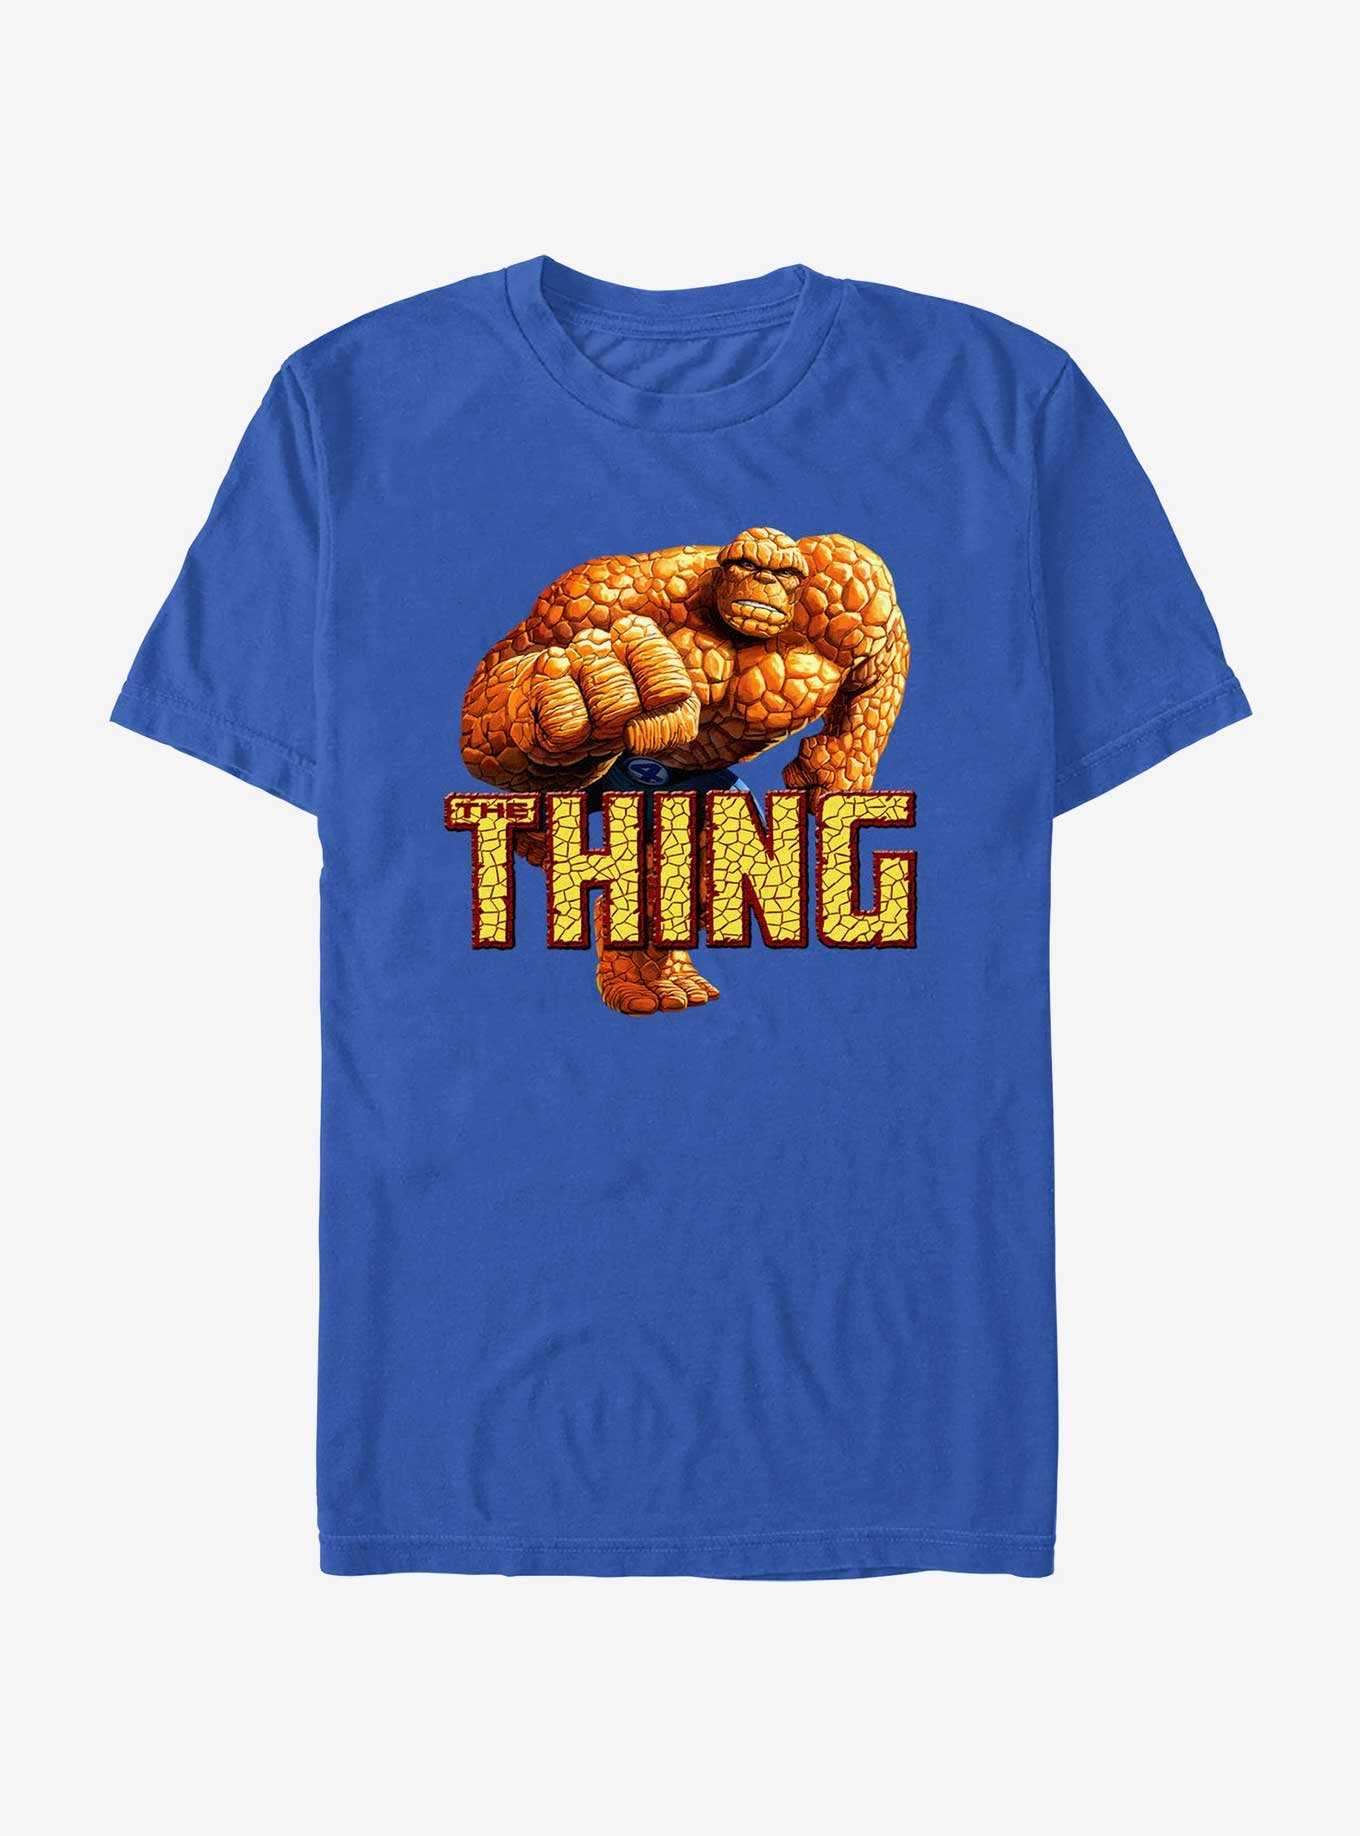 Marvel Fantastic Four G Thing T-Shirt, , hi-res